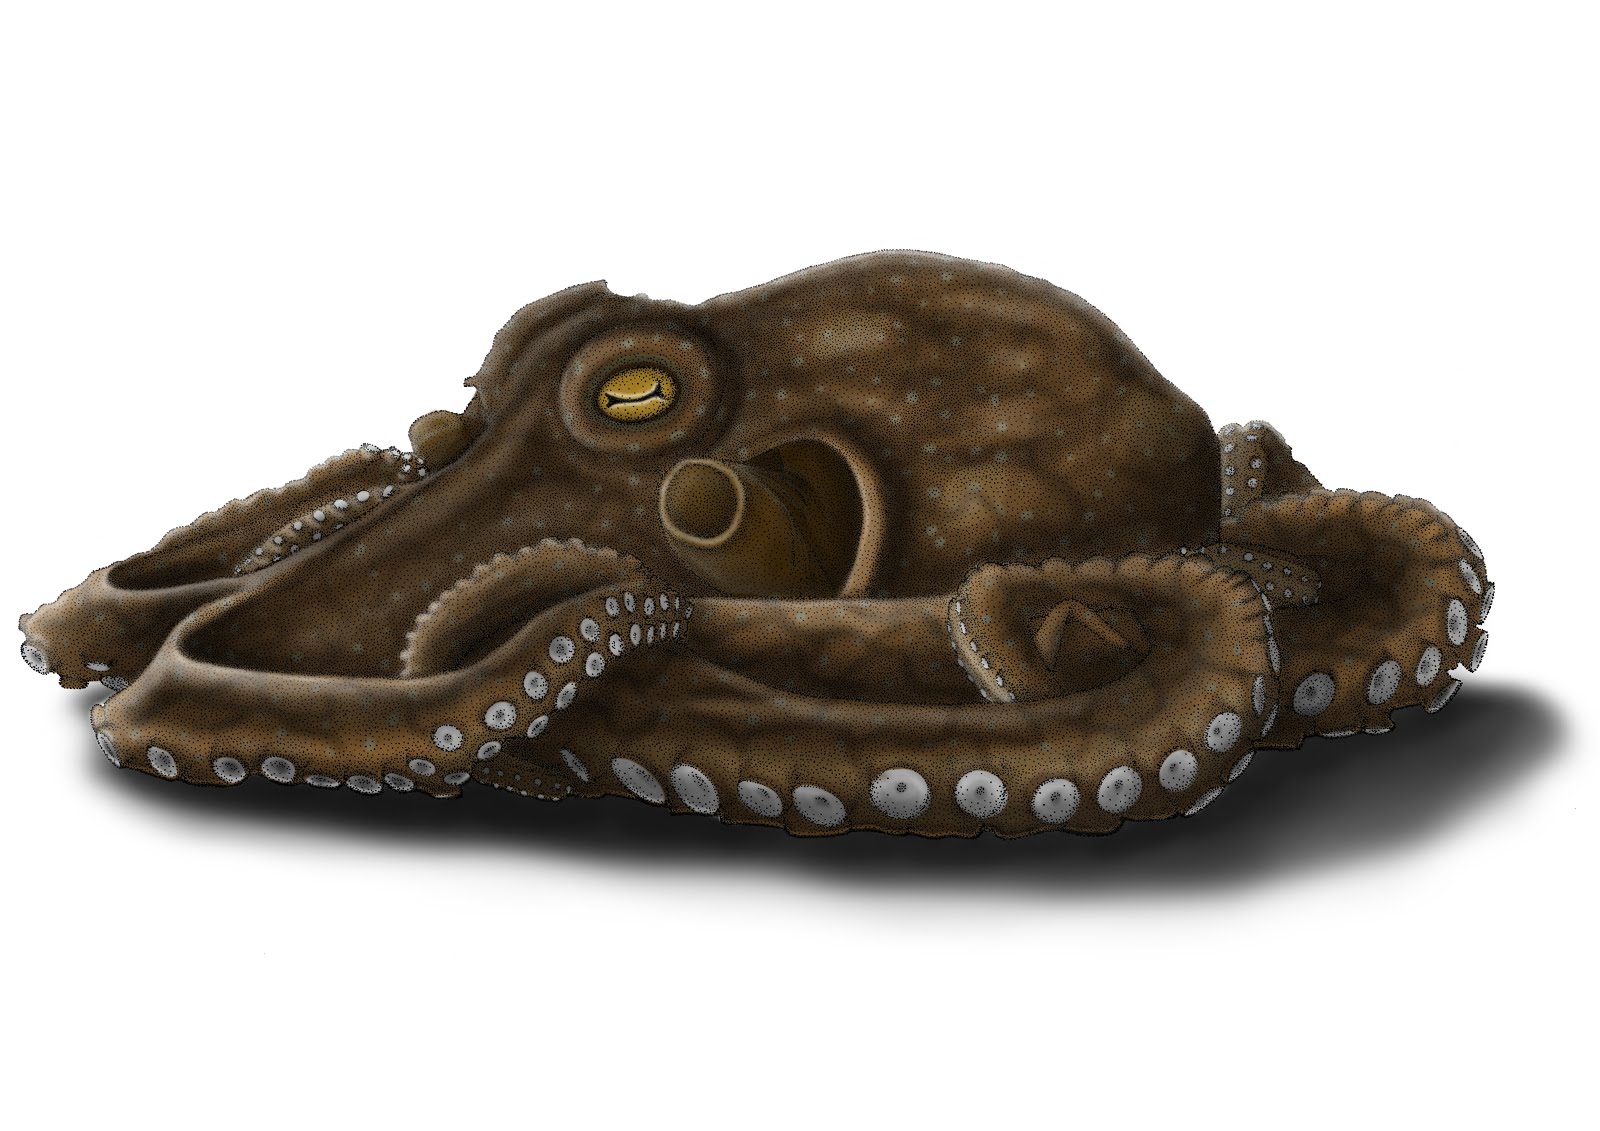 octopus vulgaris scientific illustration by michael grubis